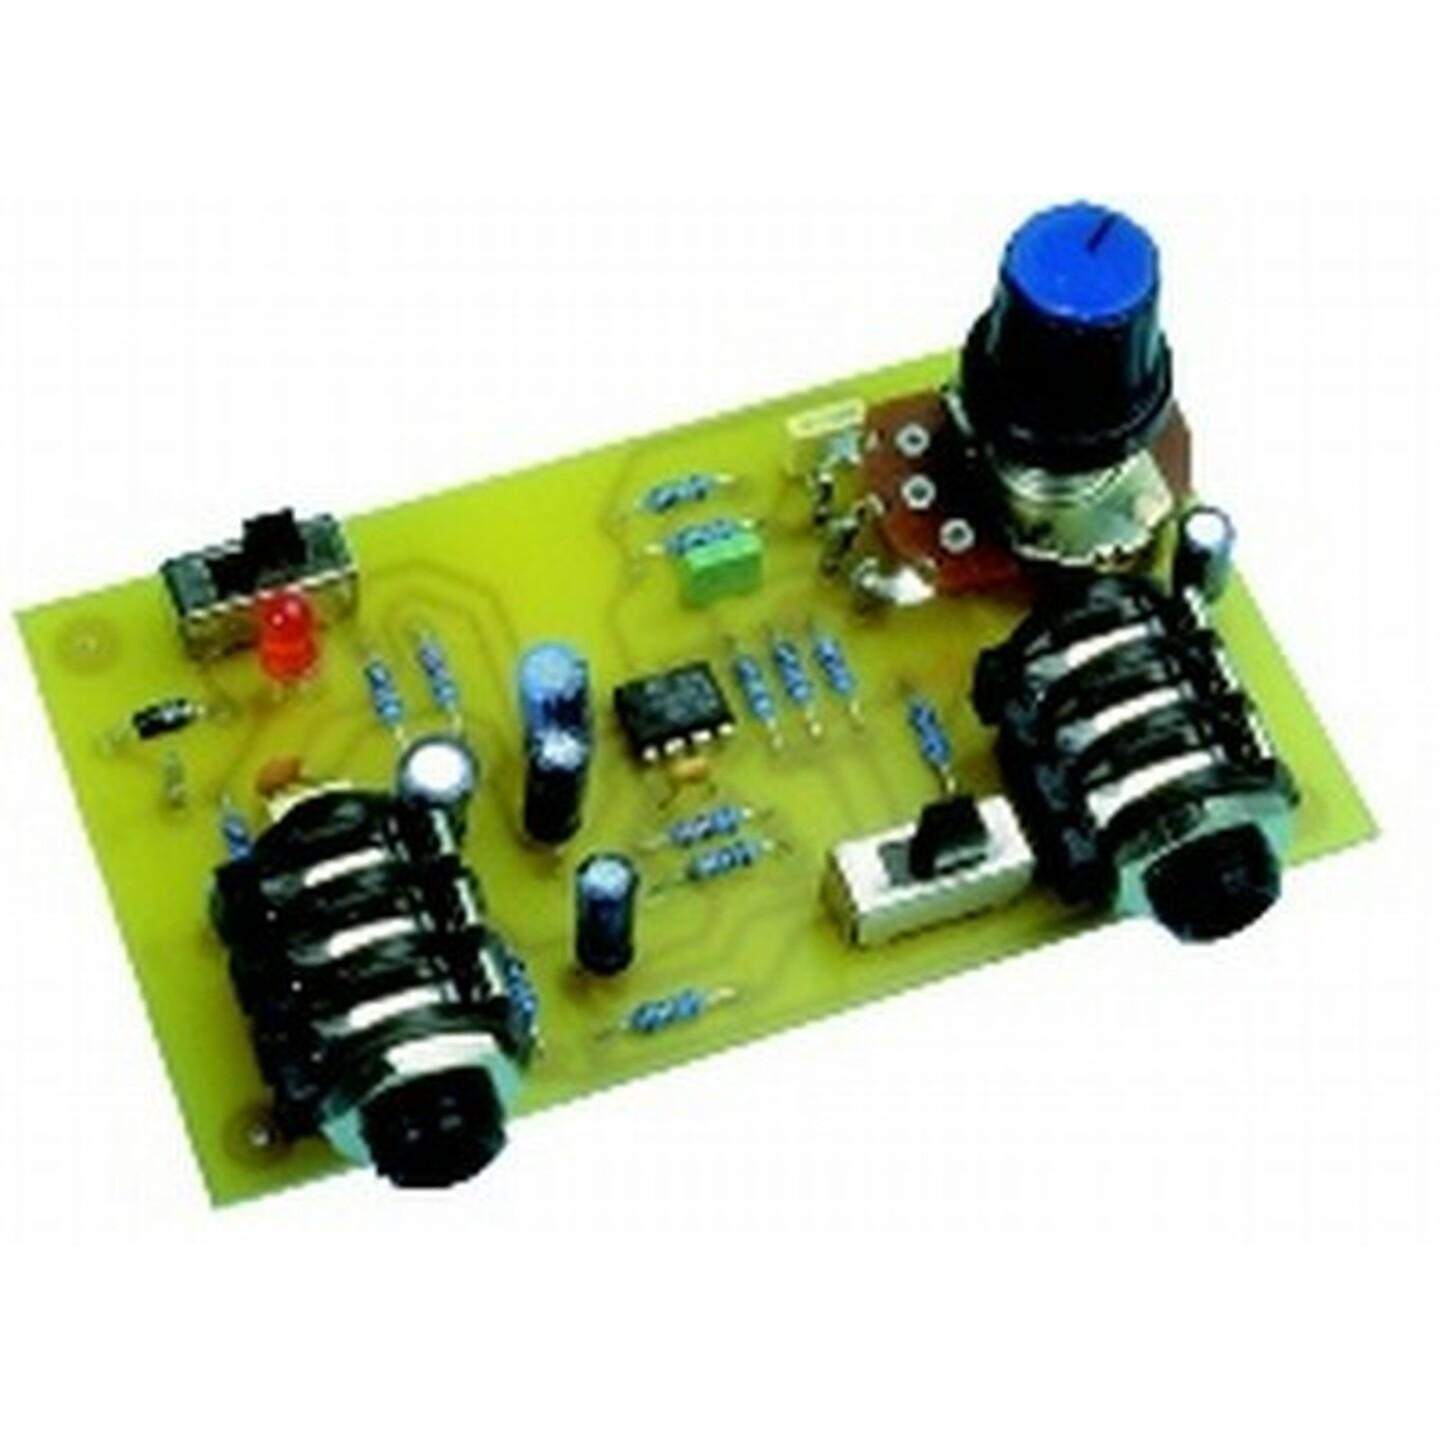 Short Circuits Three Project - Universal Tone Control